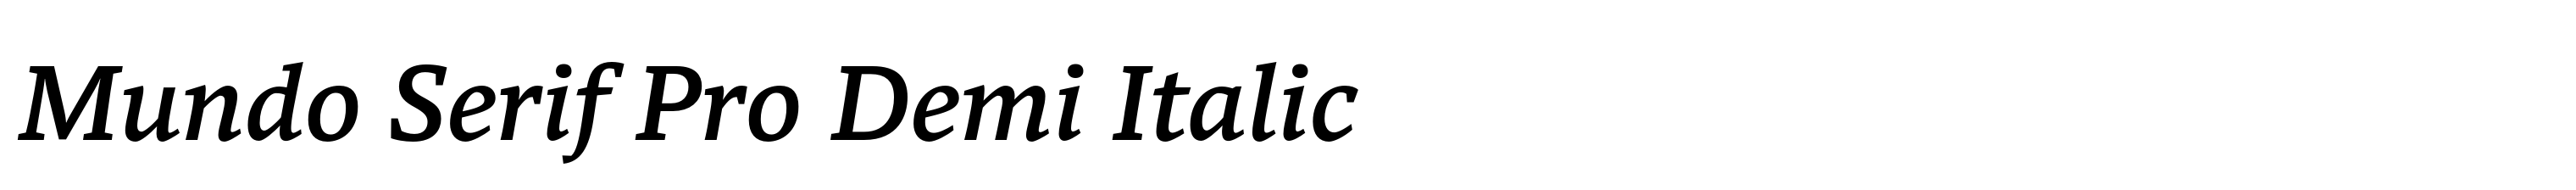 Mundo Serif Pro Demi Italic